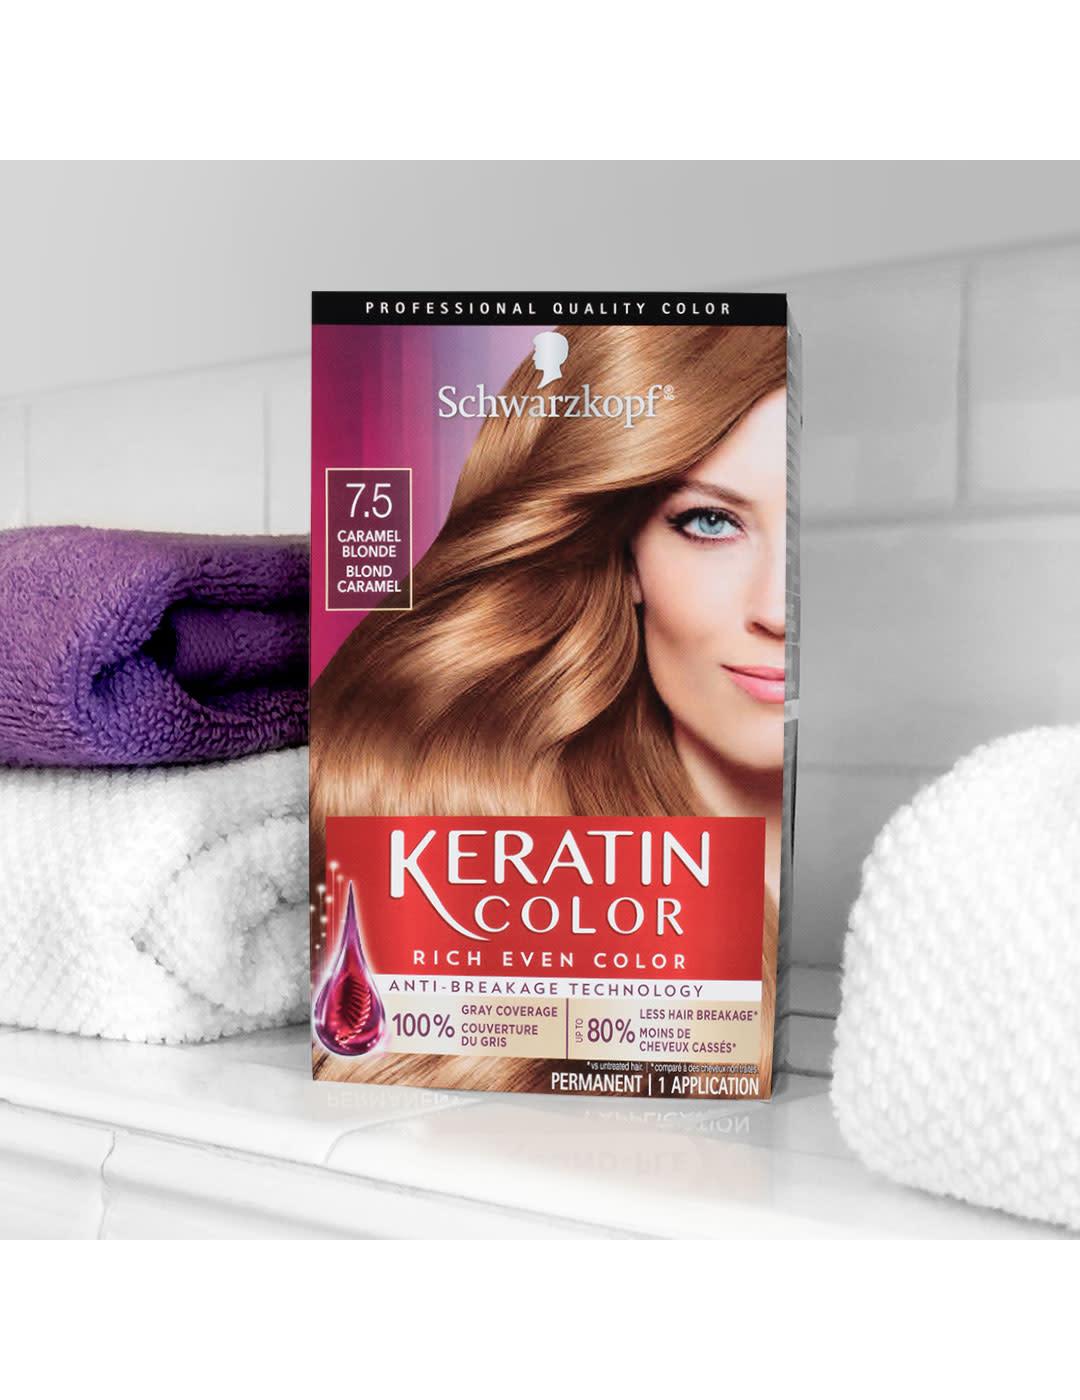 Schwarzkopf Keratin Color Permanent Hair Color Cream, 7.5 Caramel Blonde; image 3 of 5